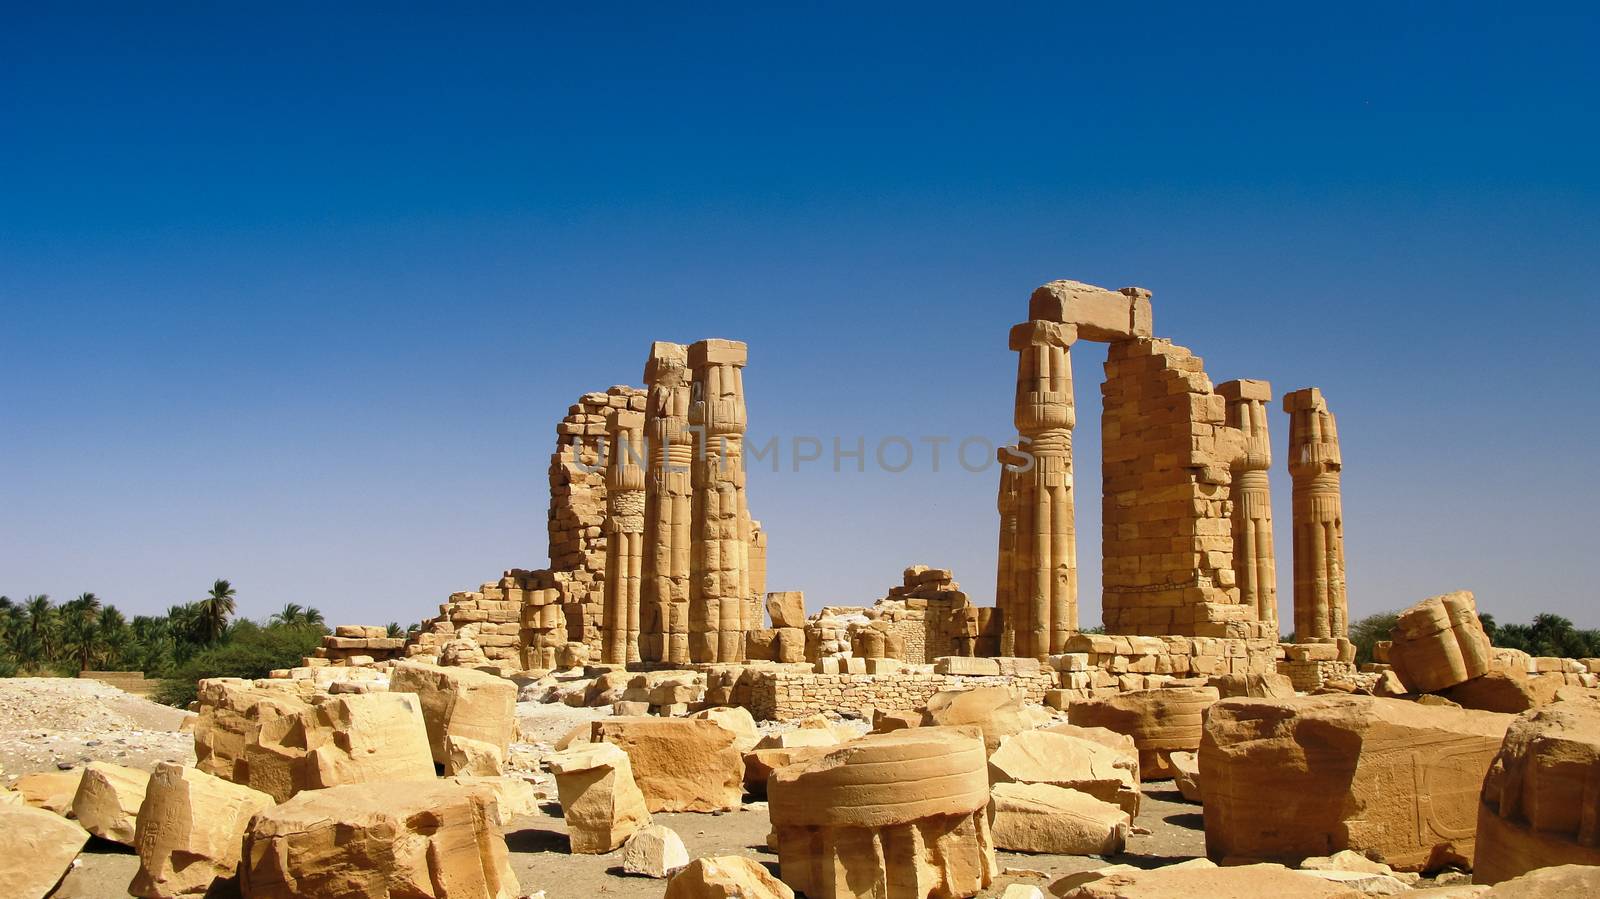 Ruines of Amun temple in Soleb Sudan by homocosmicos